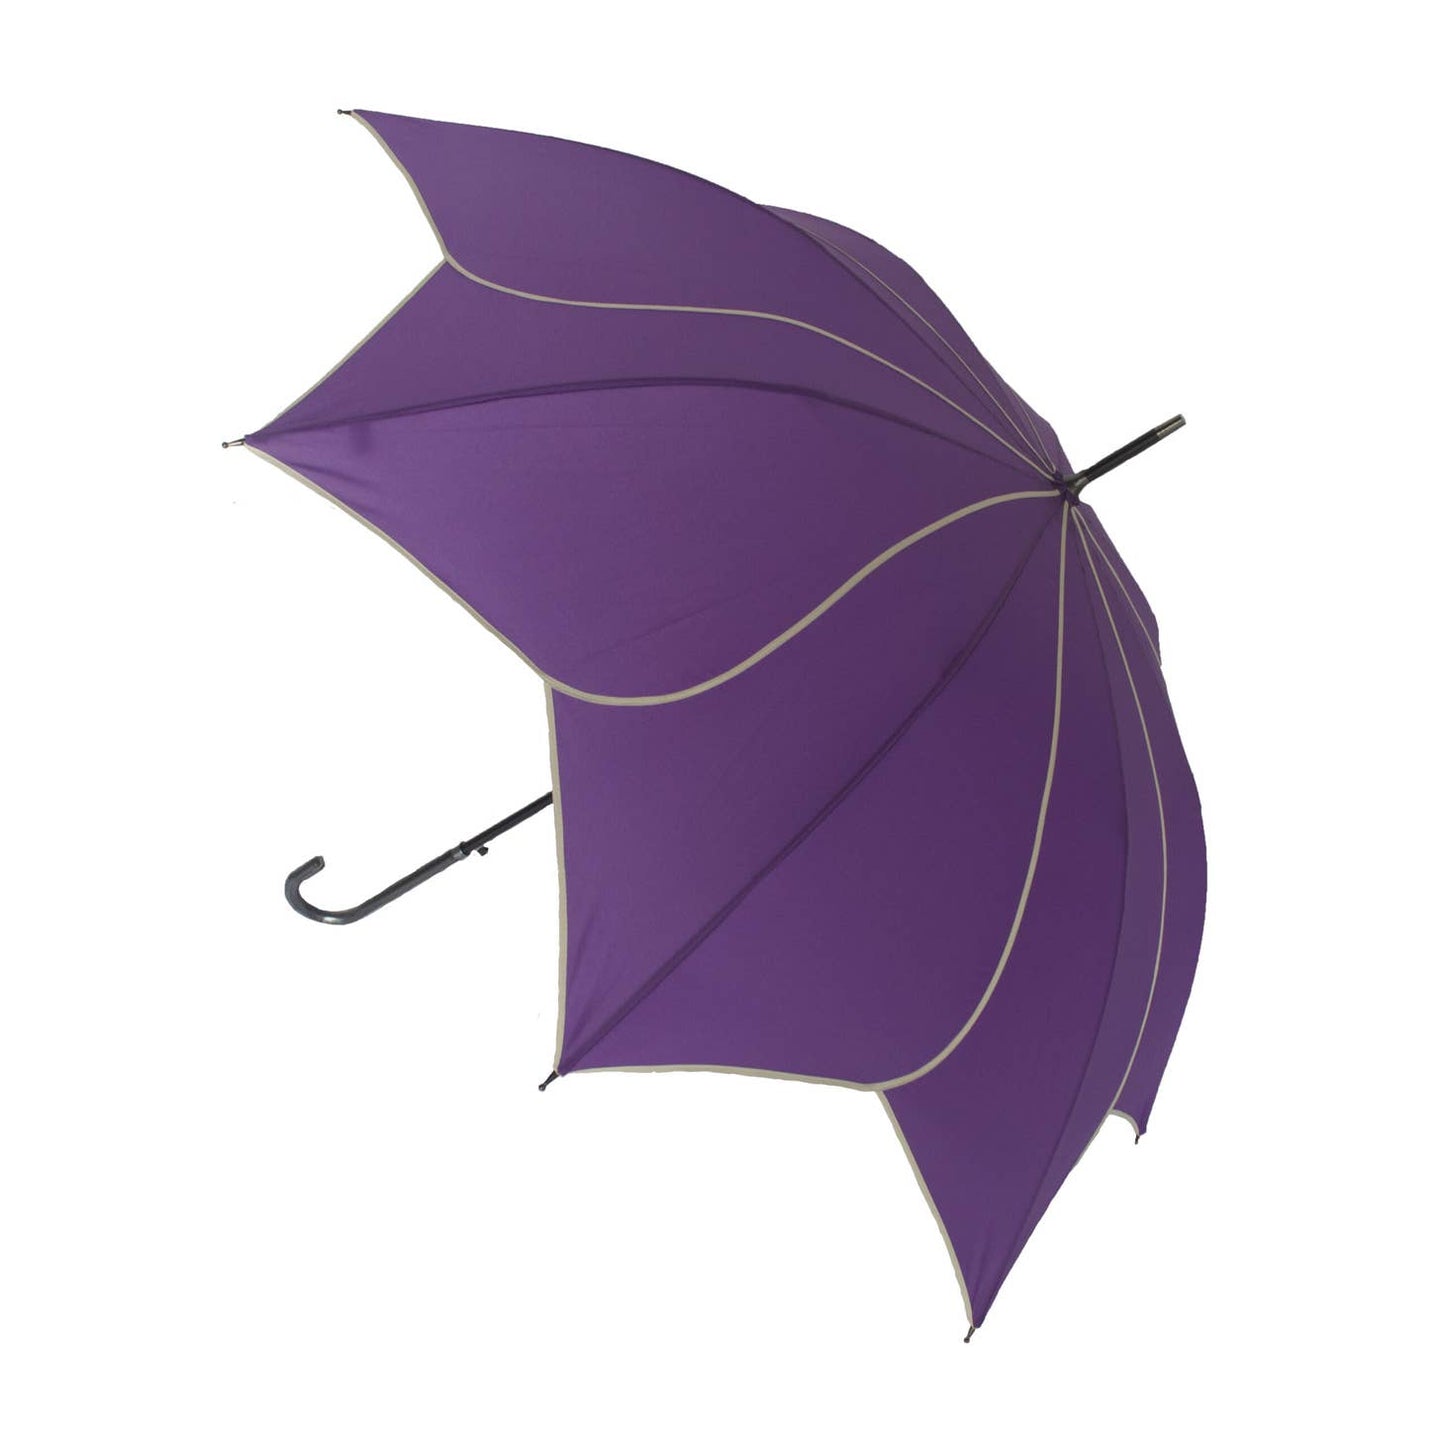 Soakes purple swirl umbrella walking stick style £22.95 exc postage